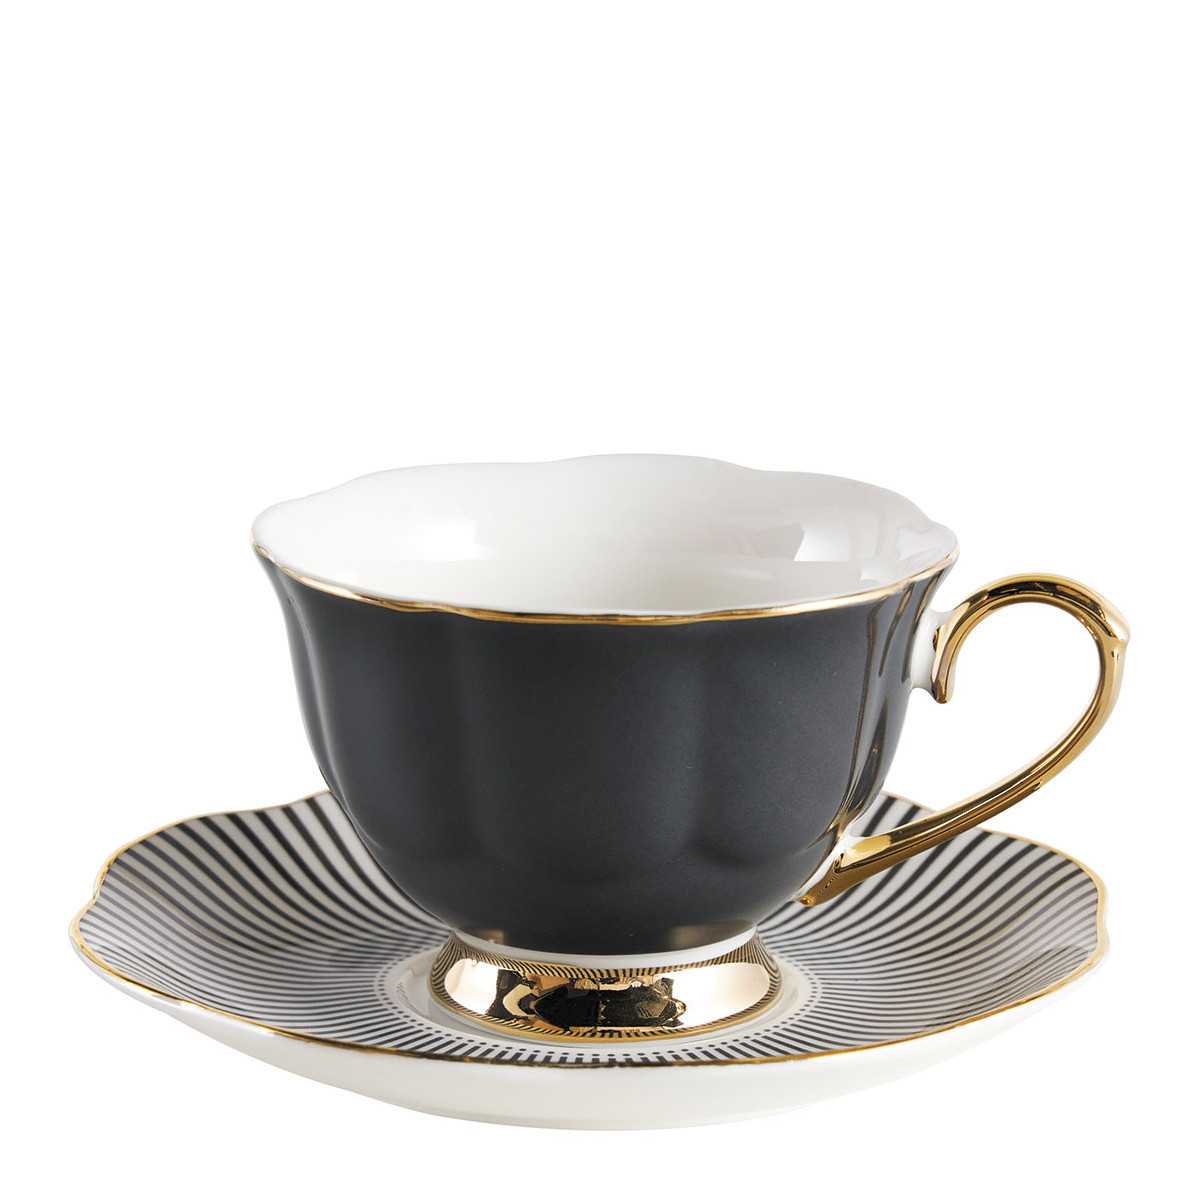 Madame de Récamier 2 teacup set - Grey